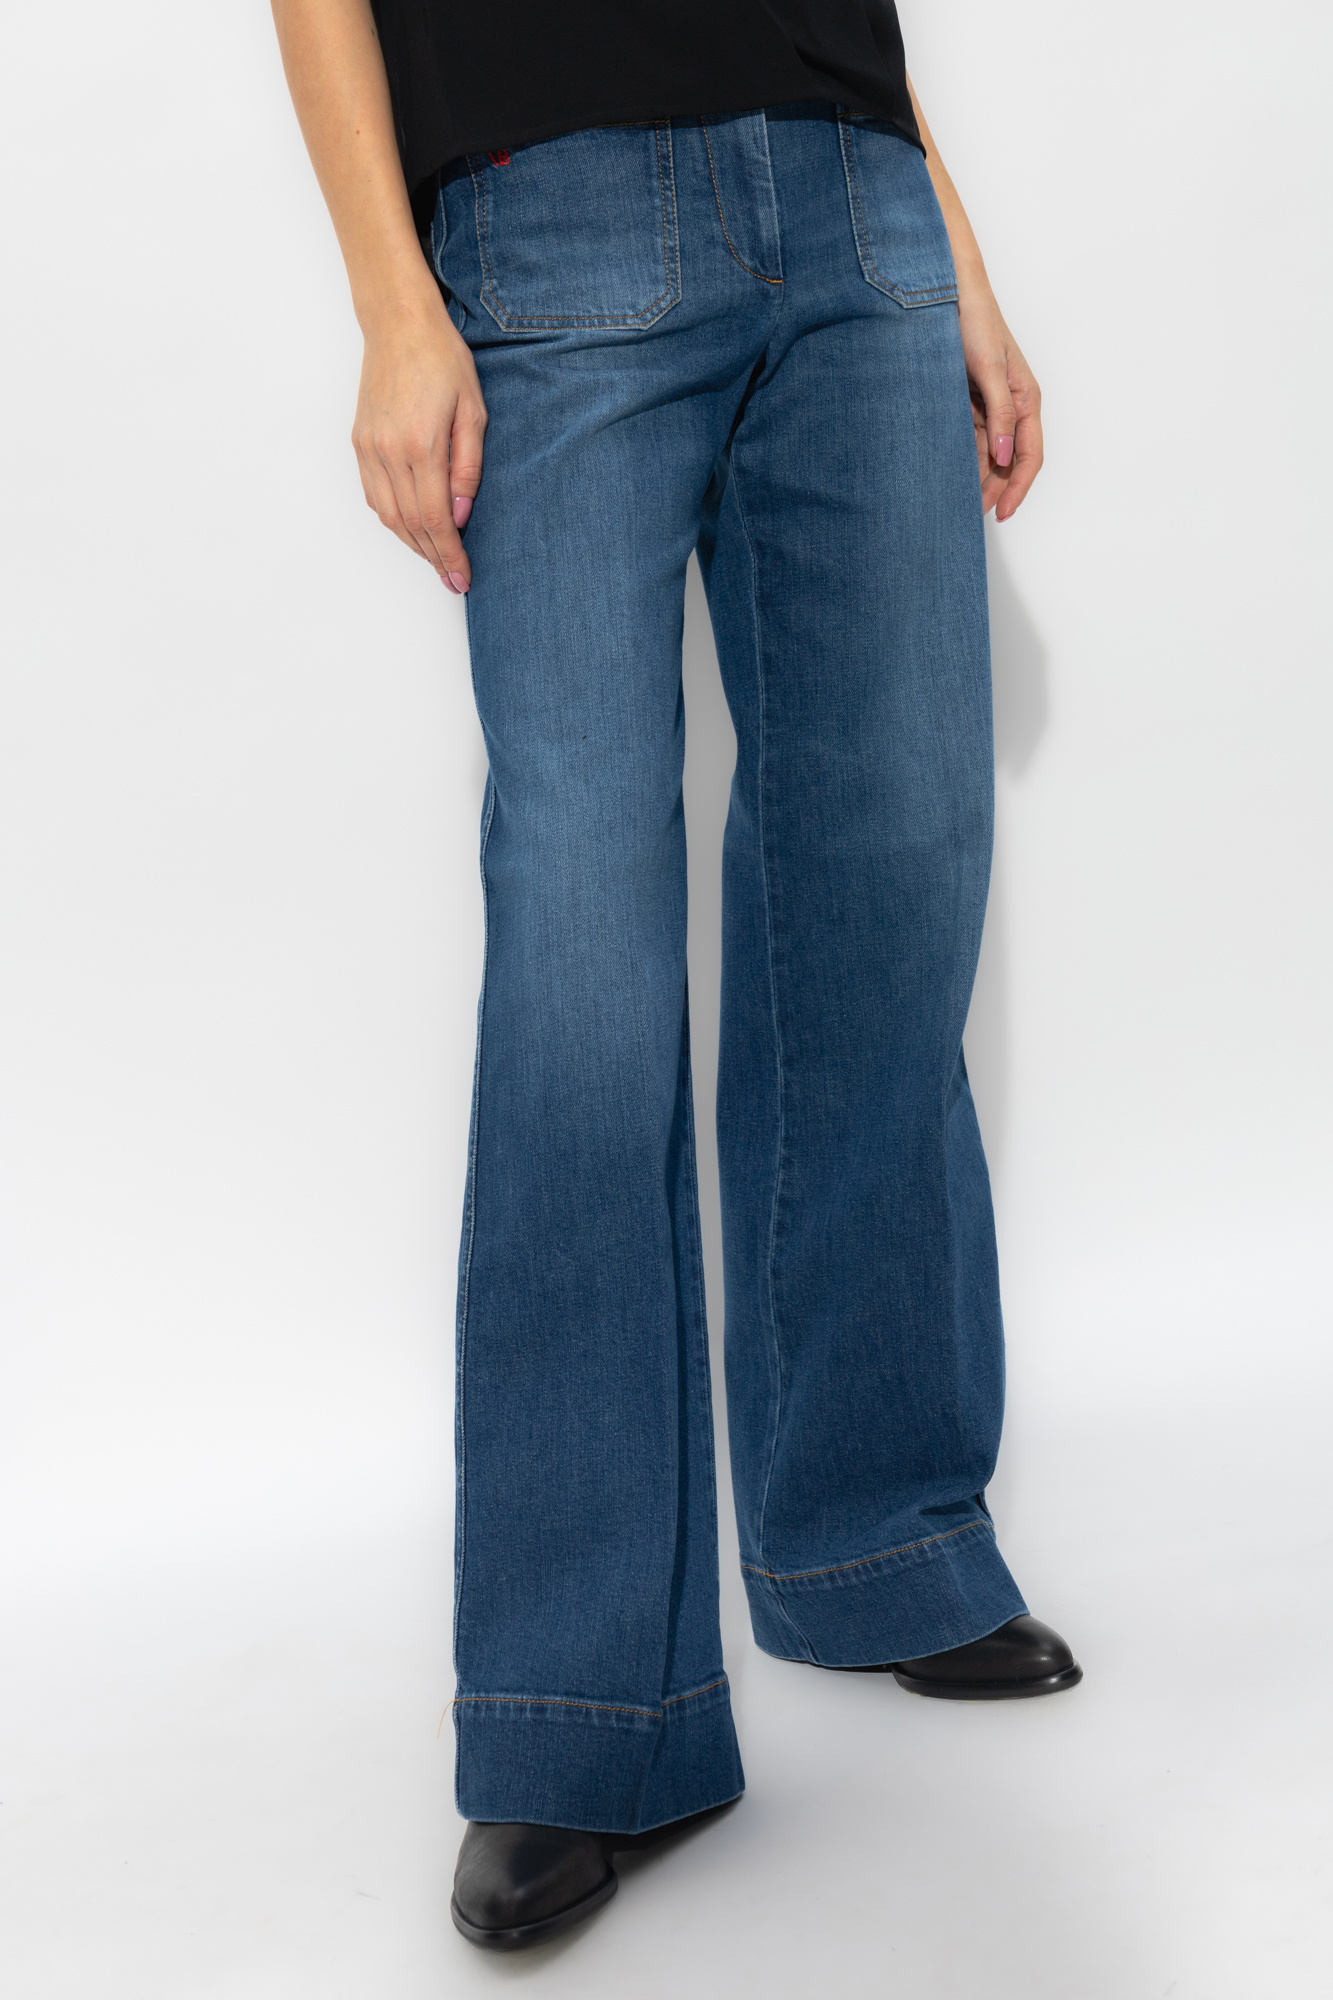 Buy Green Vintage Straight Leg Jeans - 24L, Jeans